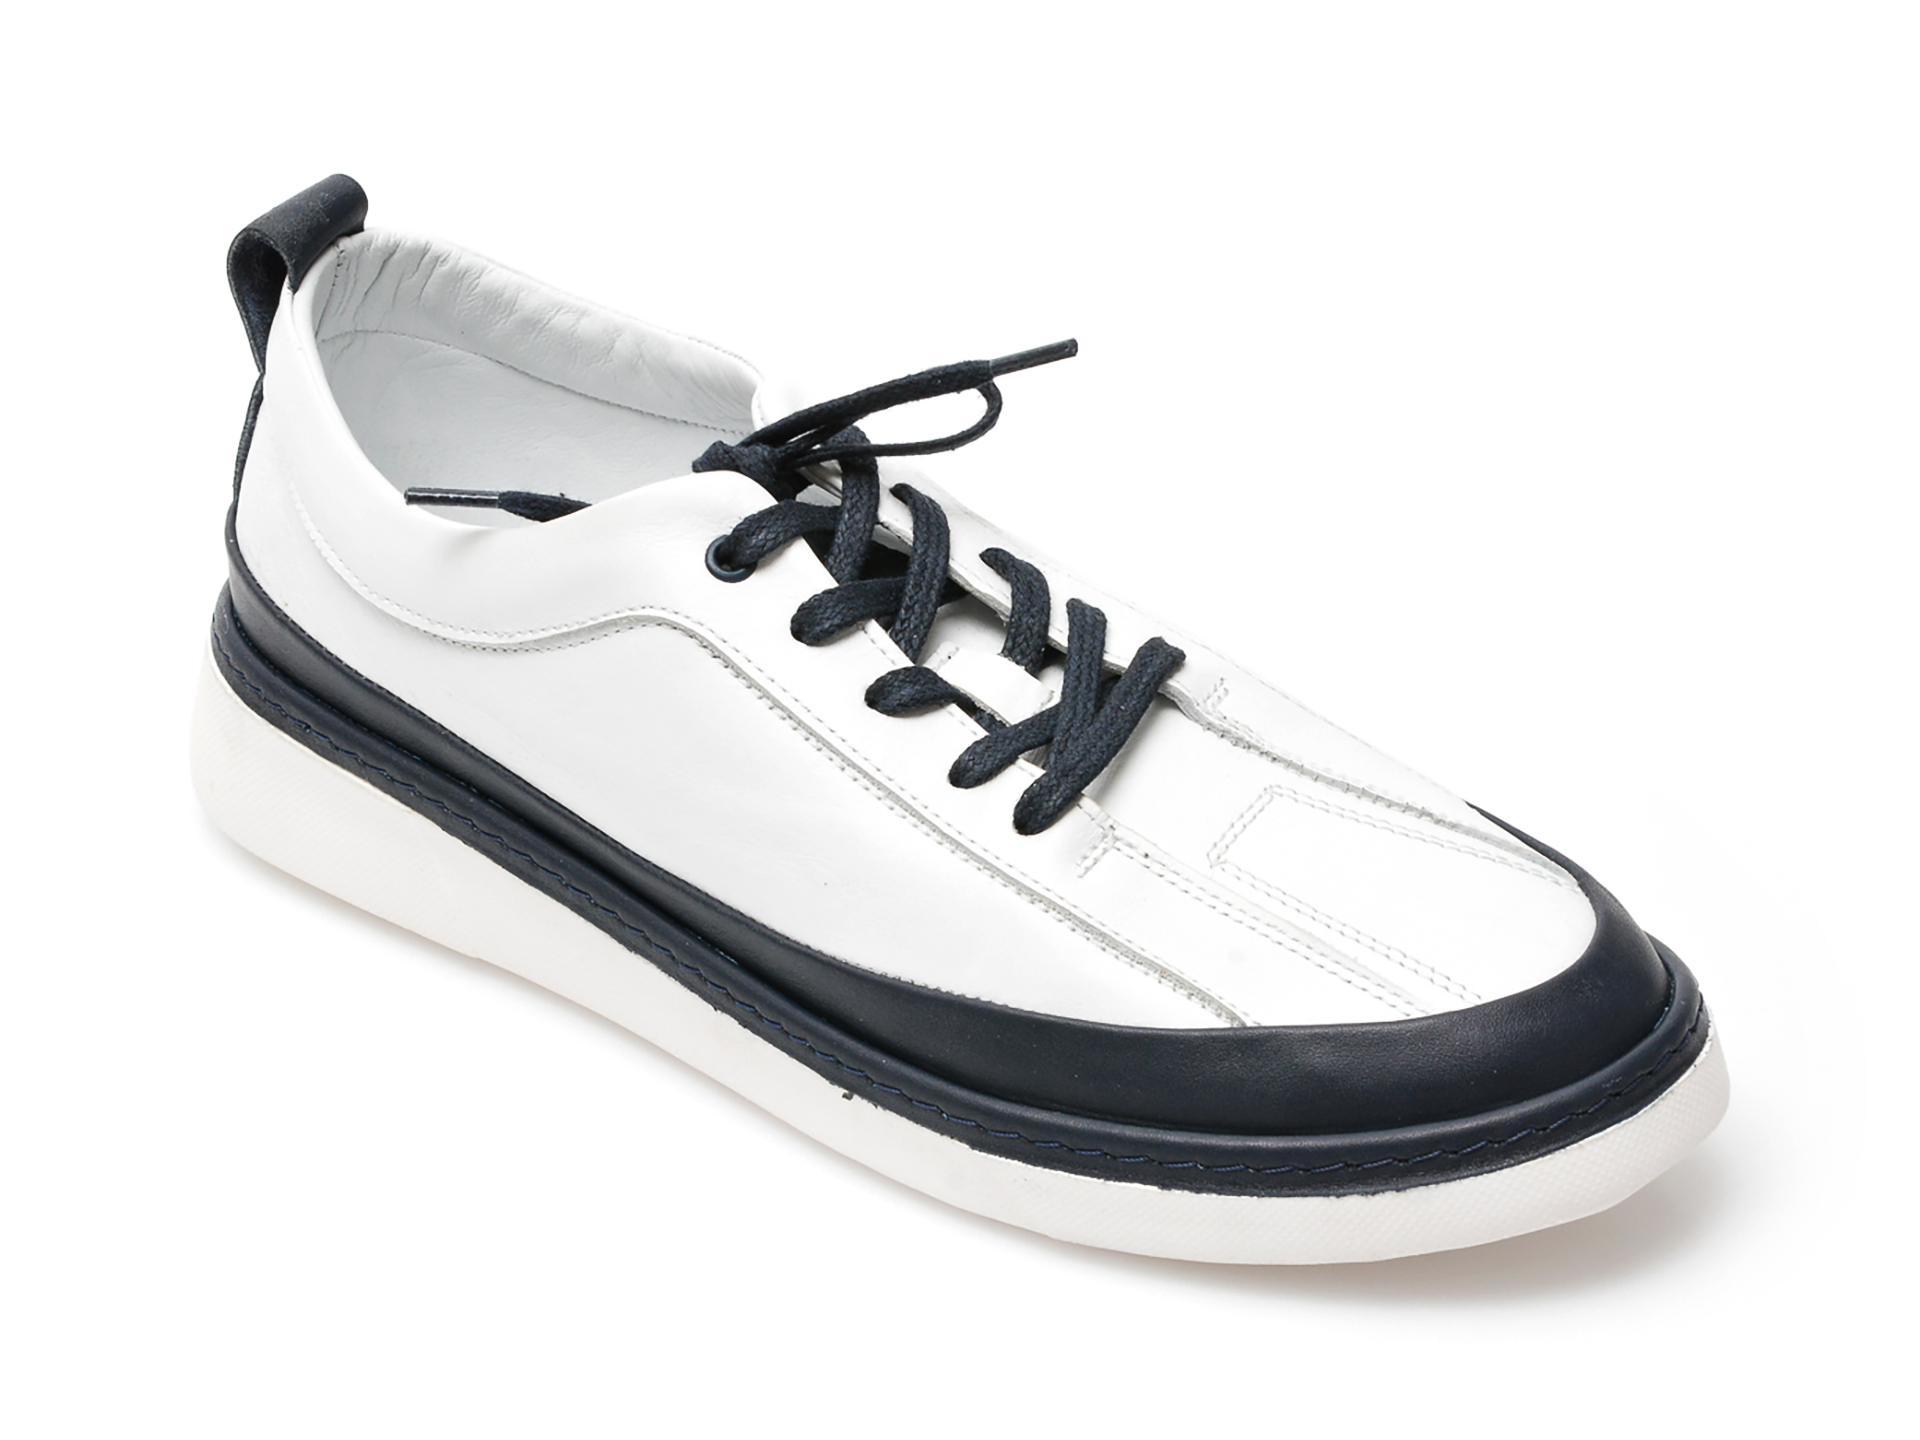 Pantofi OTTER albi, M6416, din piele naturala Otter imagine 2022 13clothing.ro